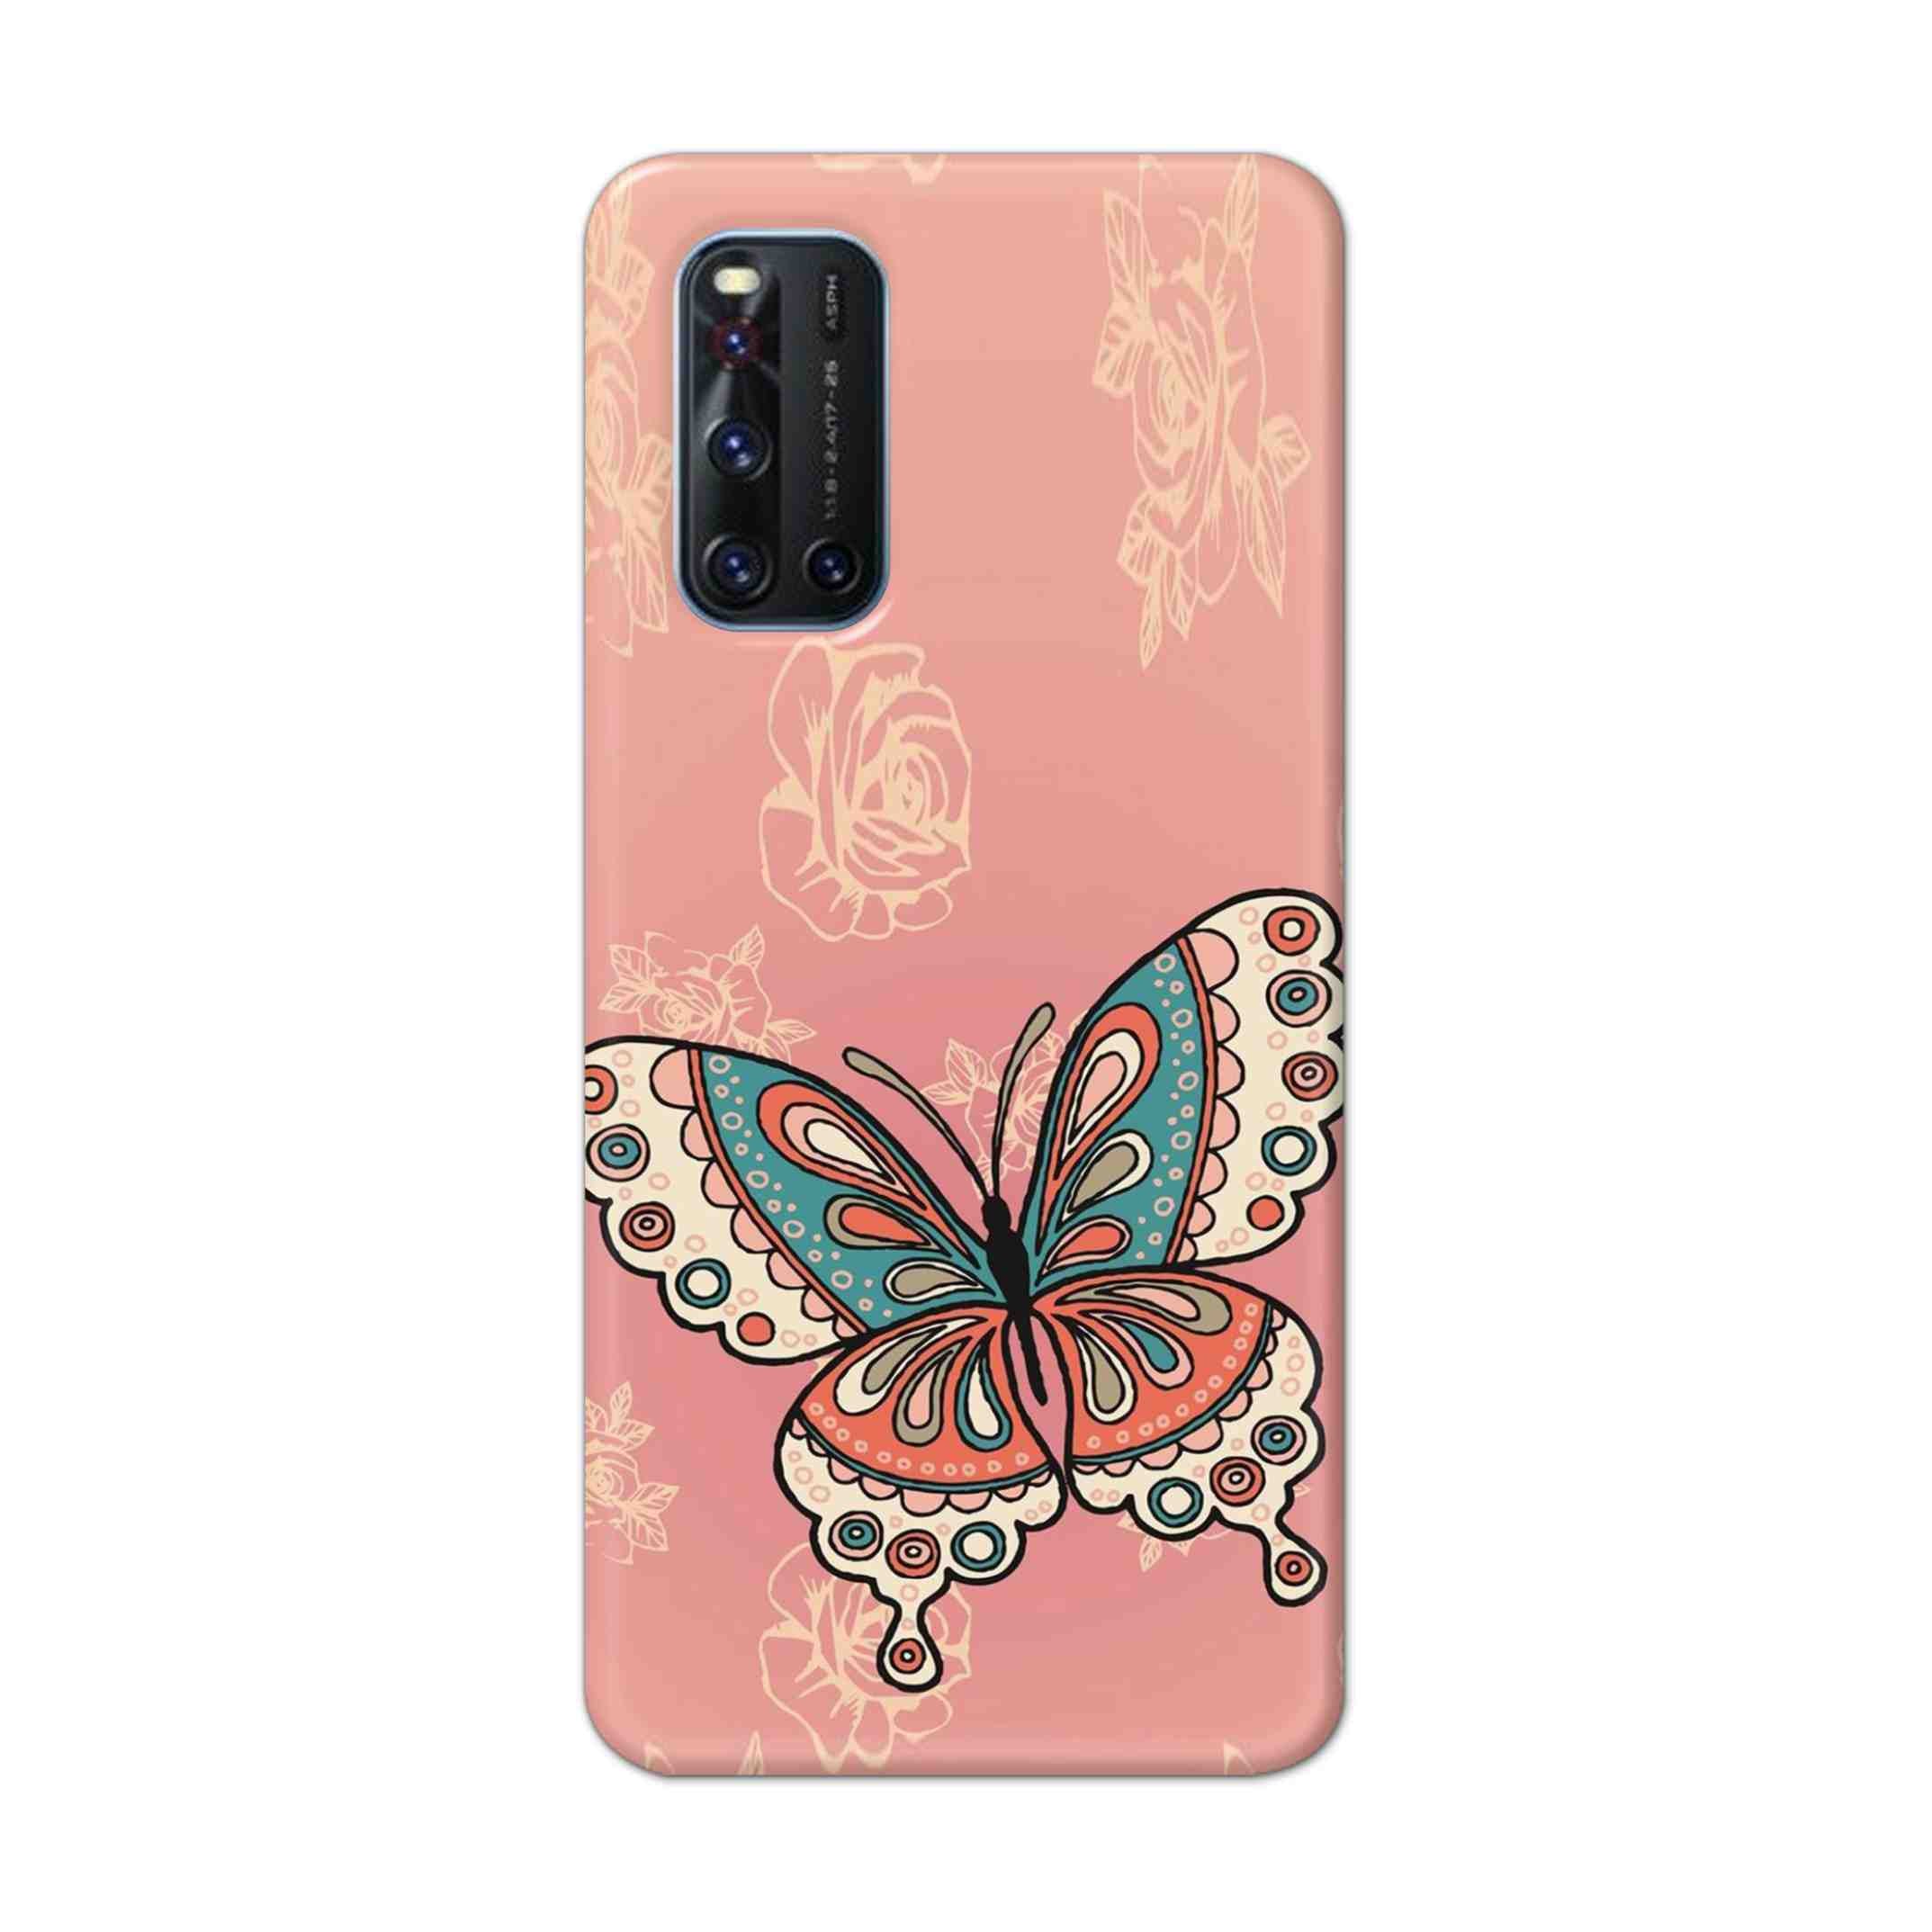 Buy Butterfly Hard Back Mobile Phone Case Cover For VivoV19 Online